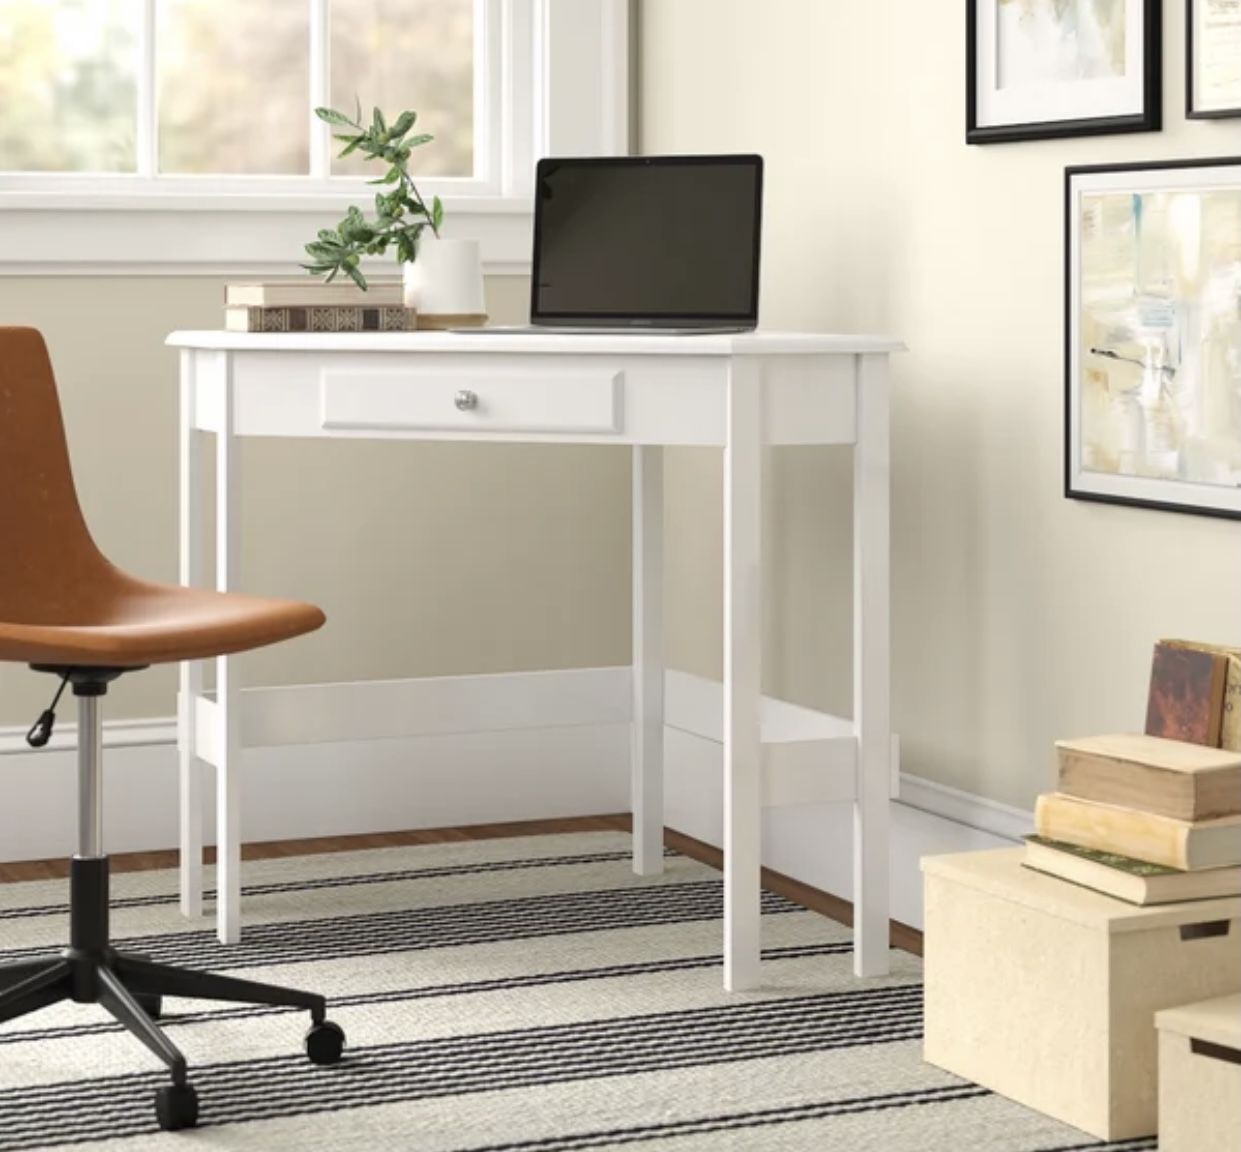 Edinburg Corner Desk in white. 30” x 28” x 28”, manufactured + solid wood. MSRP $254. Our price $155 + sales tax    